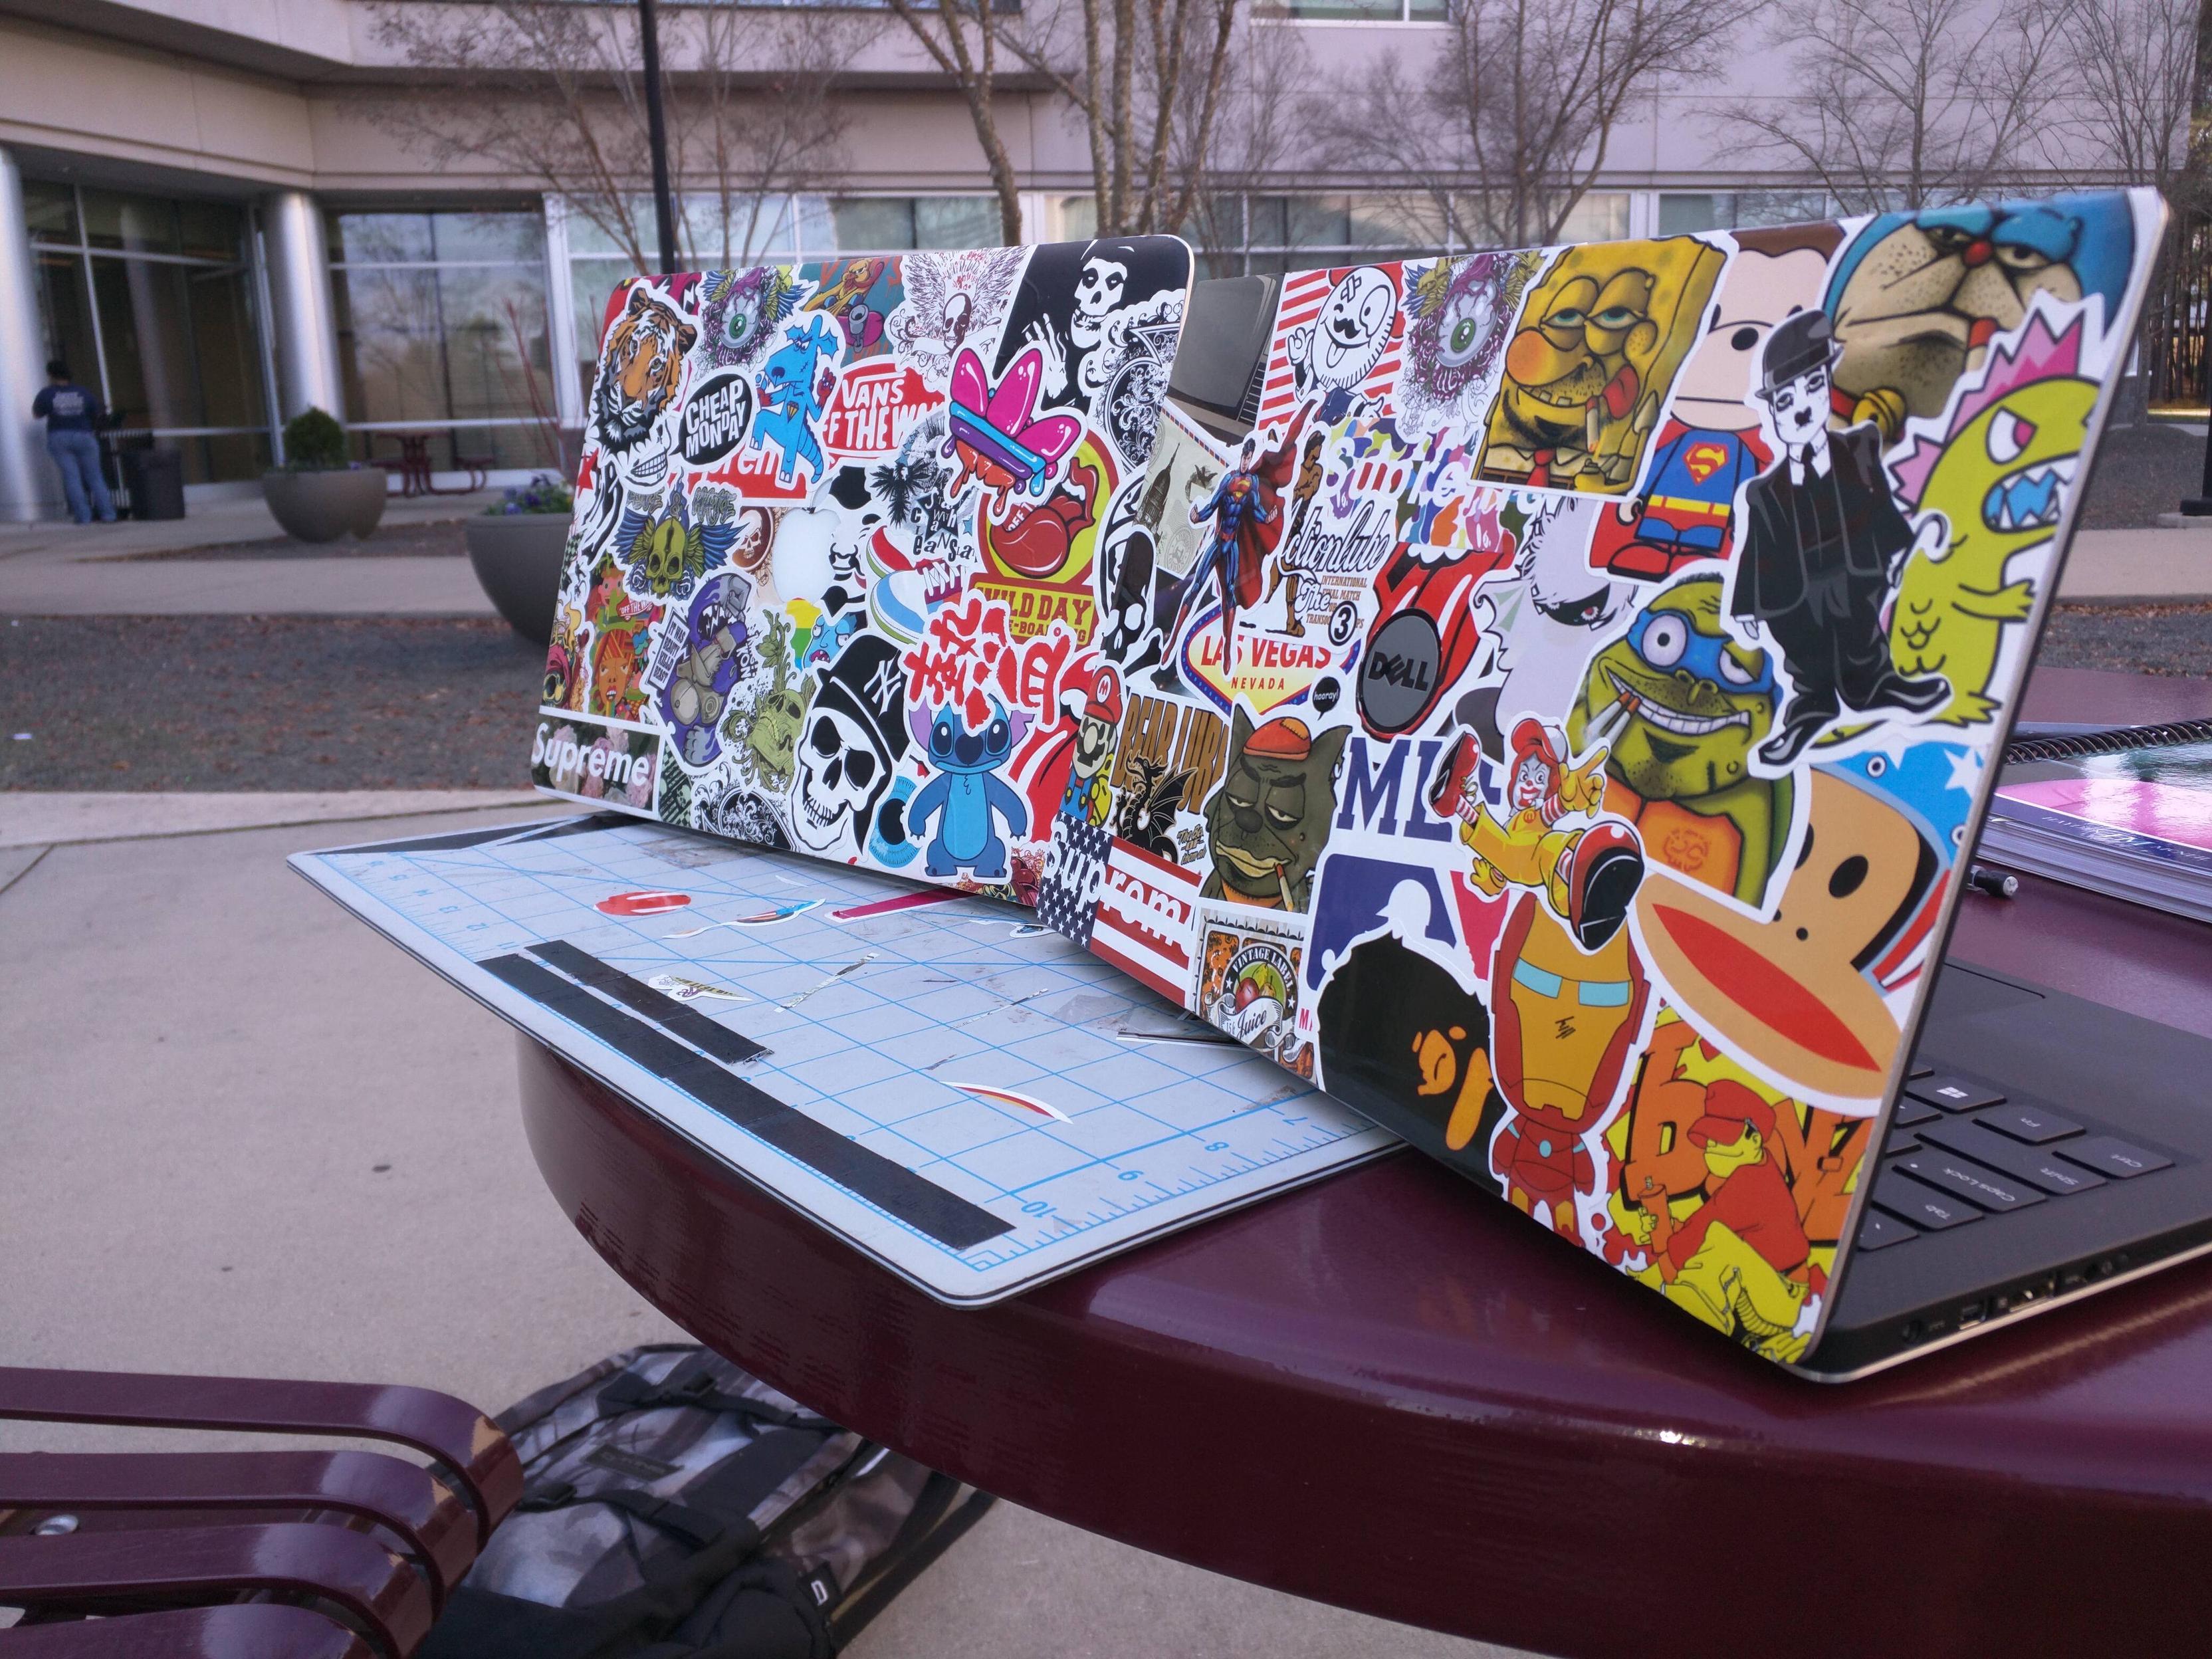 Sticker bombed laptops